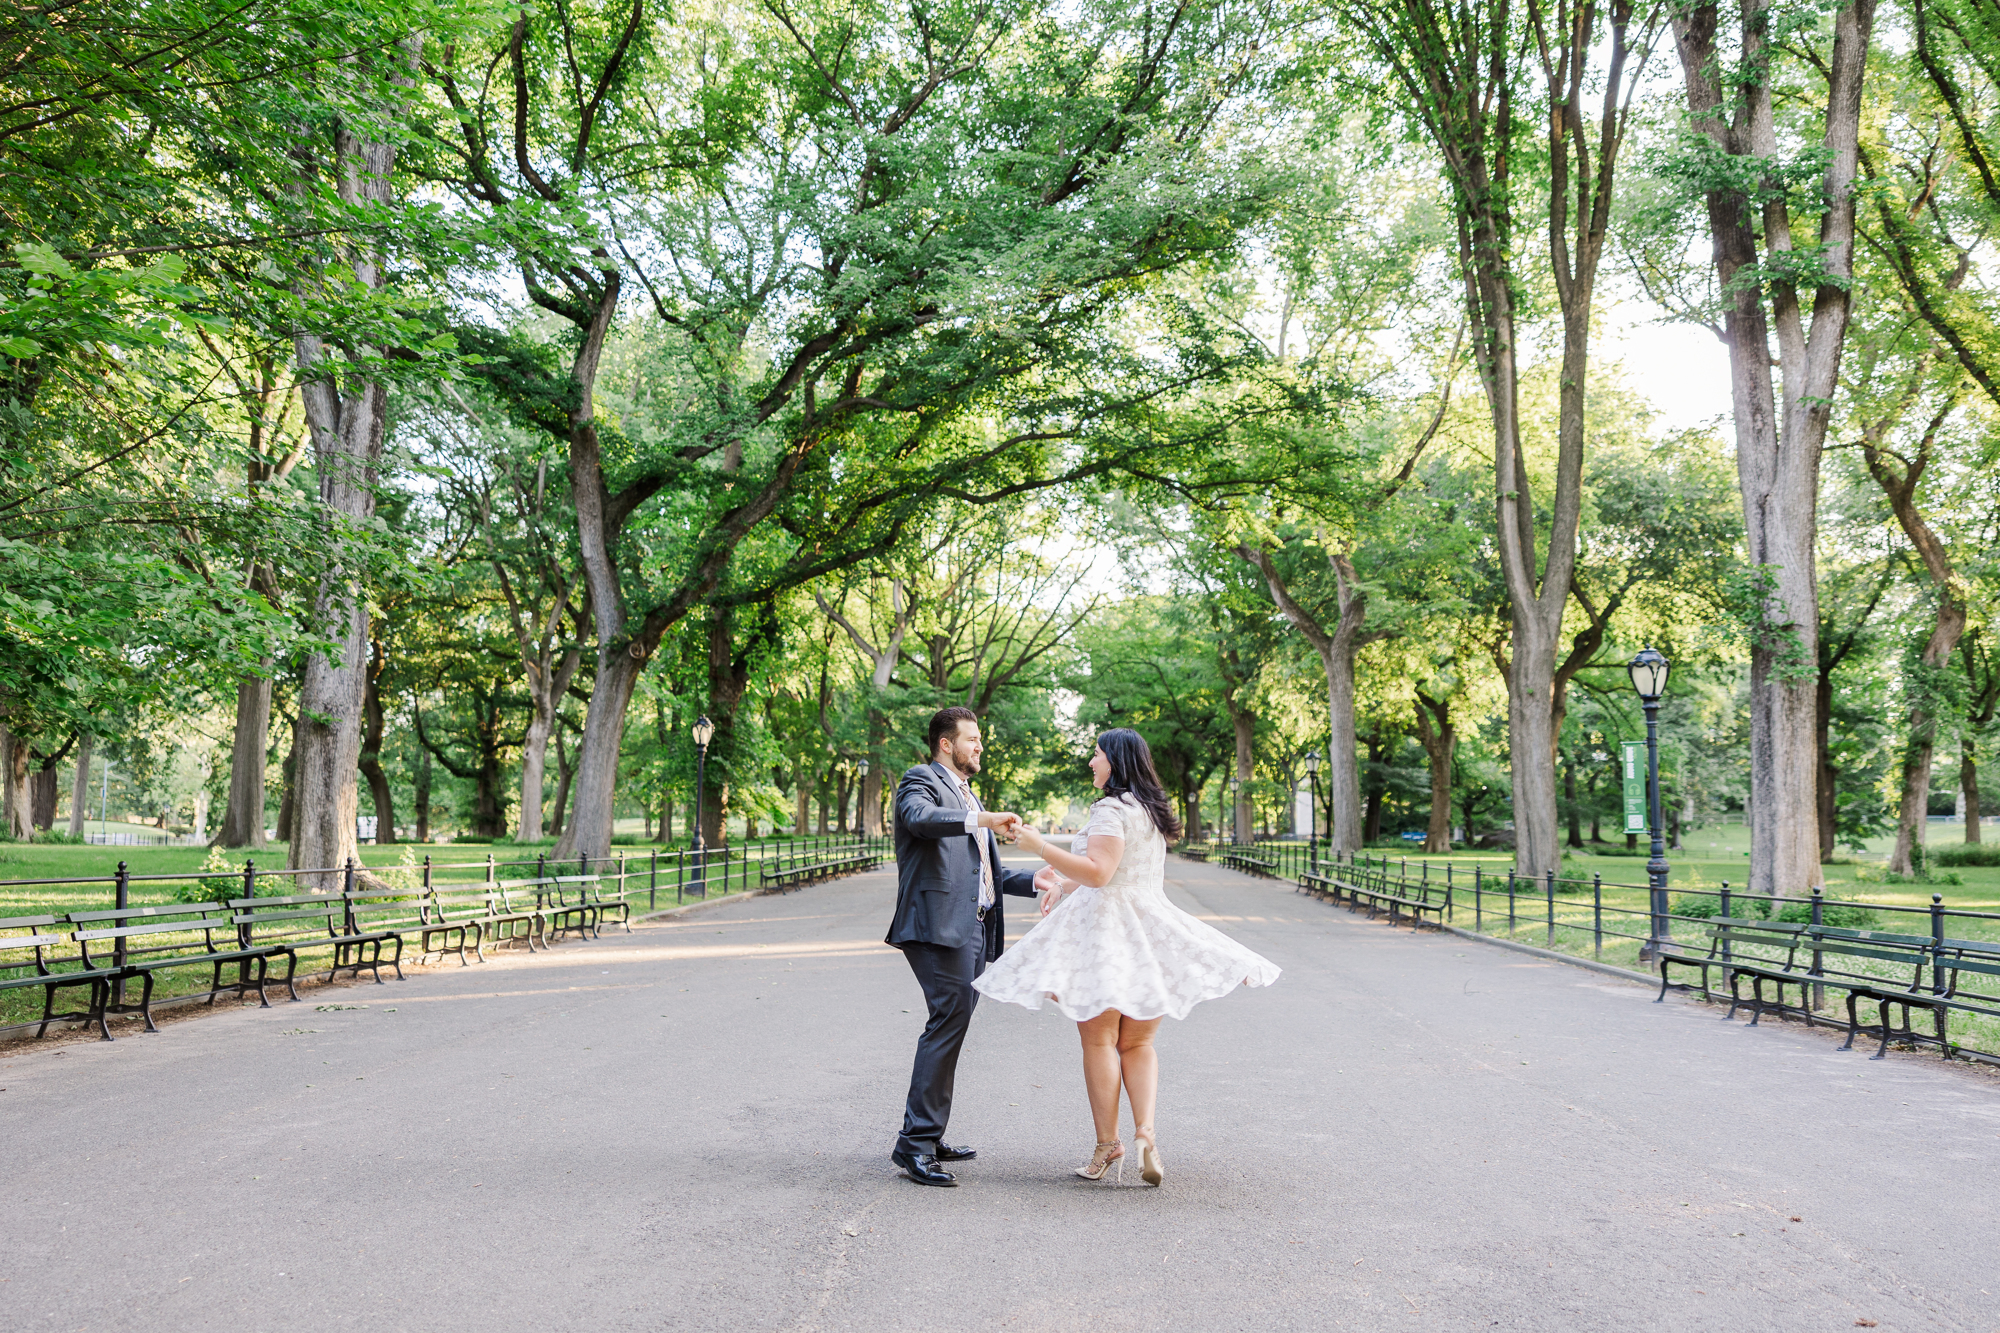 Stunning Engagement Photos with Landmarks, New York